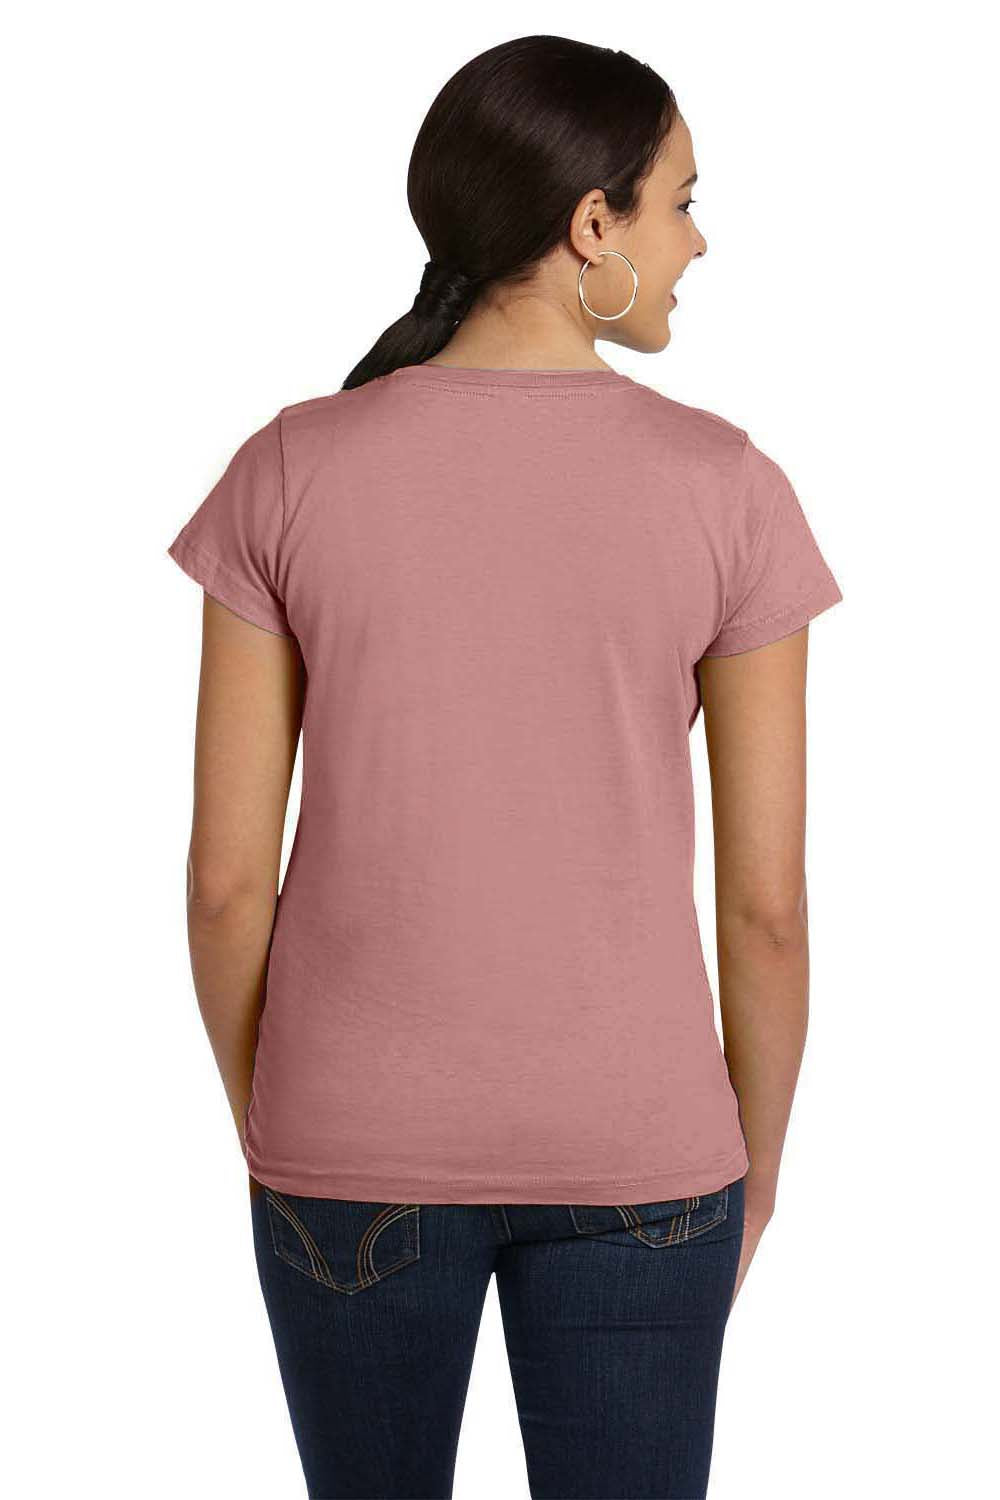 LAT 3516 Fine Jersey Short Sleeve Crewneck T-Shirt Marvelous Pink Back